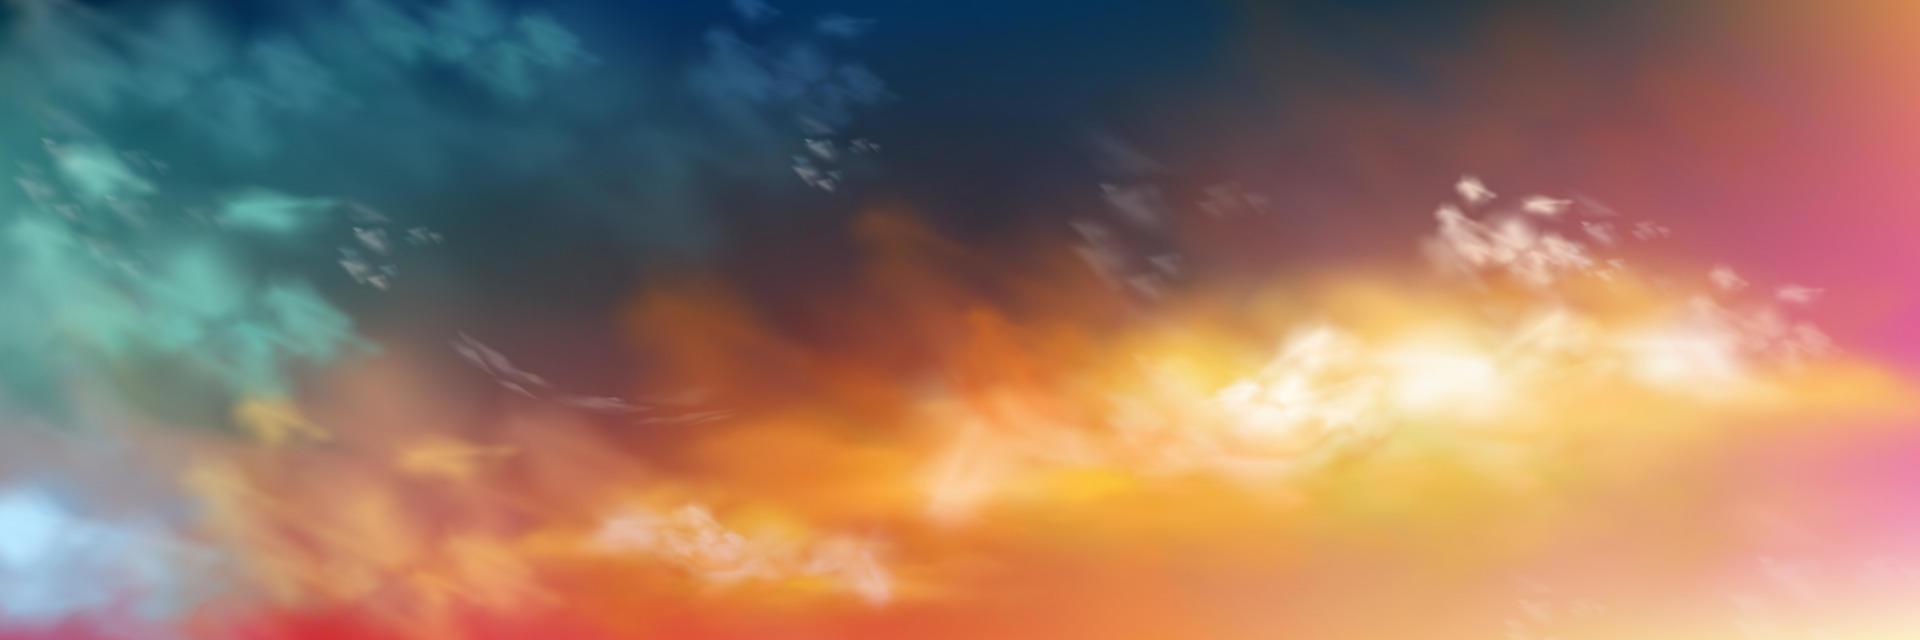 zonsondergang lucht met realistisch wolk structuur vector